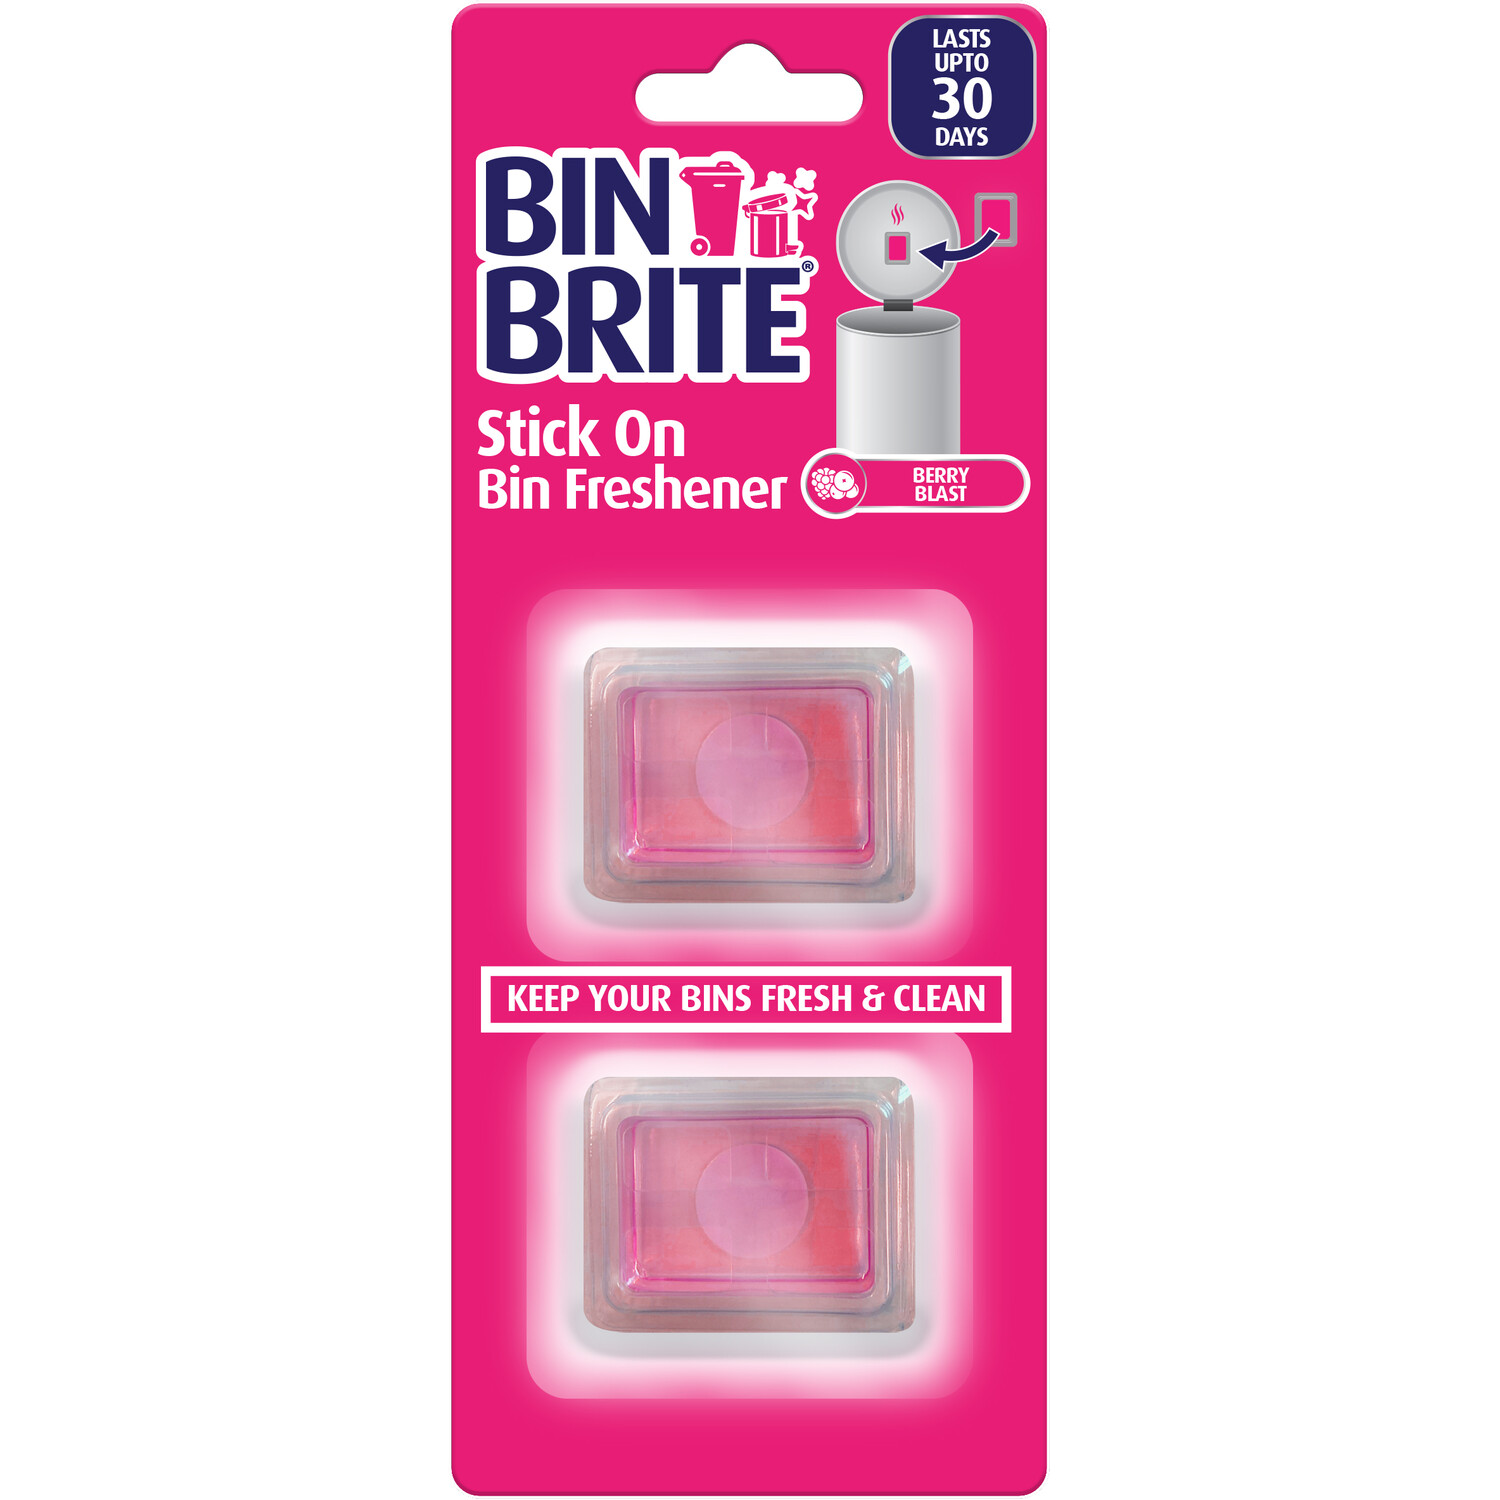 Bin Brite Stick On Bin Freshener - Berry Blast Image